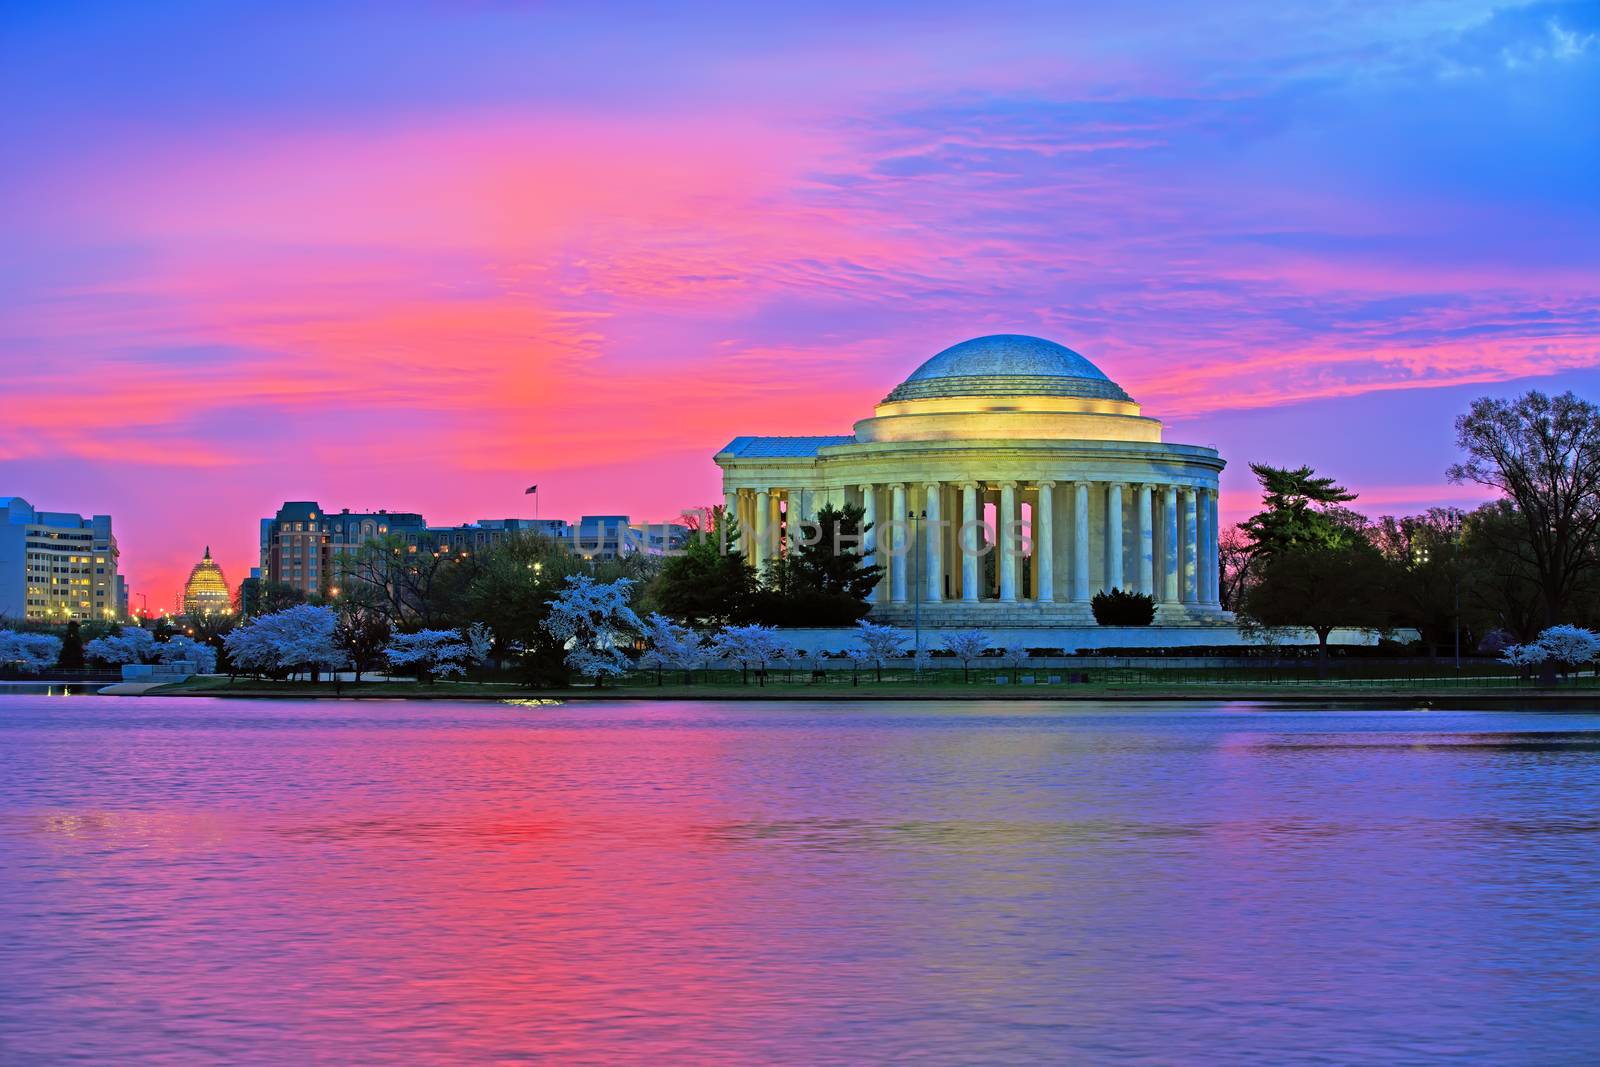  Jefferson Memorial at Sunrise by DelmasLehman